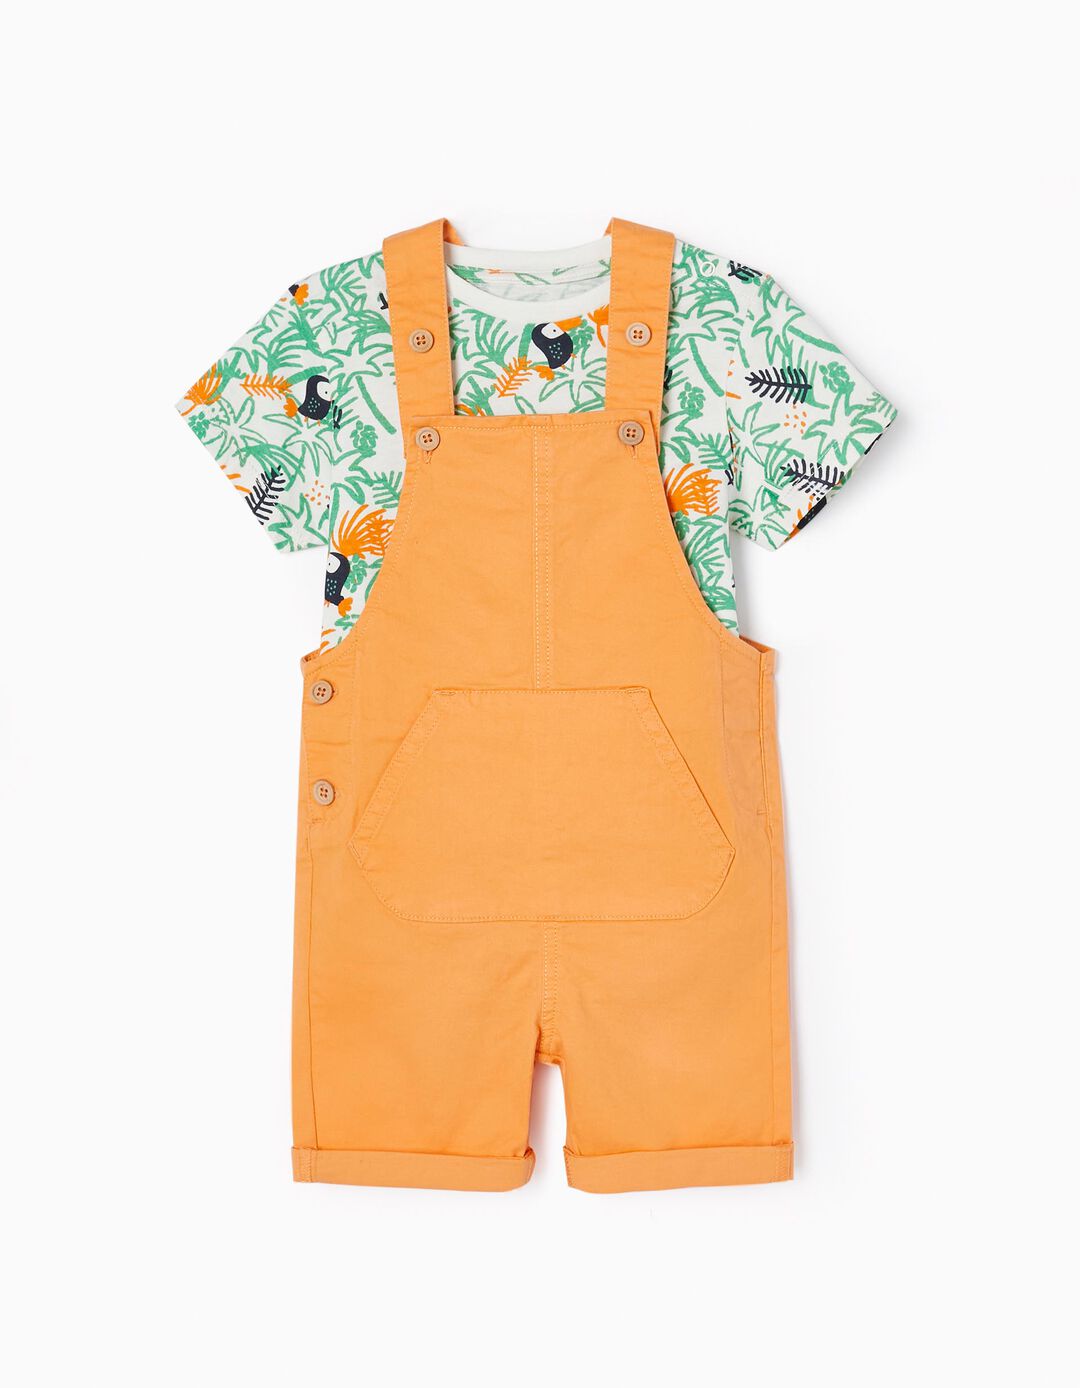 Jumpsuit + T-shirt for Baby Boys 'Toucan', White/Orange